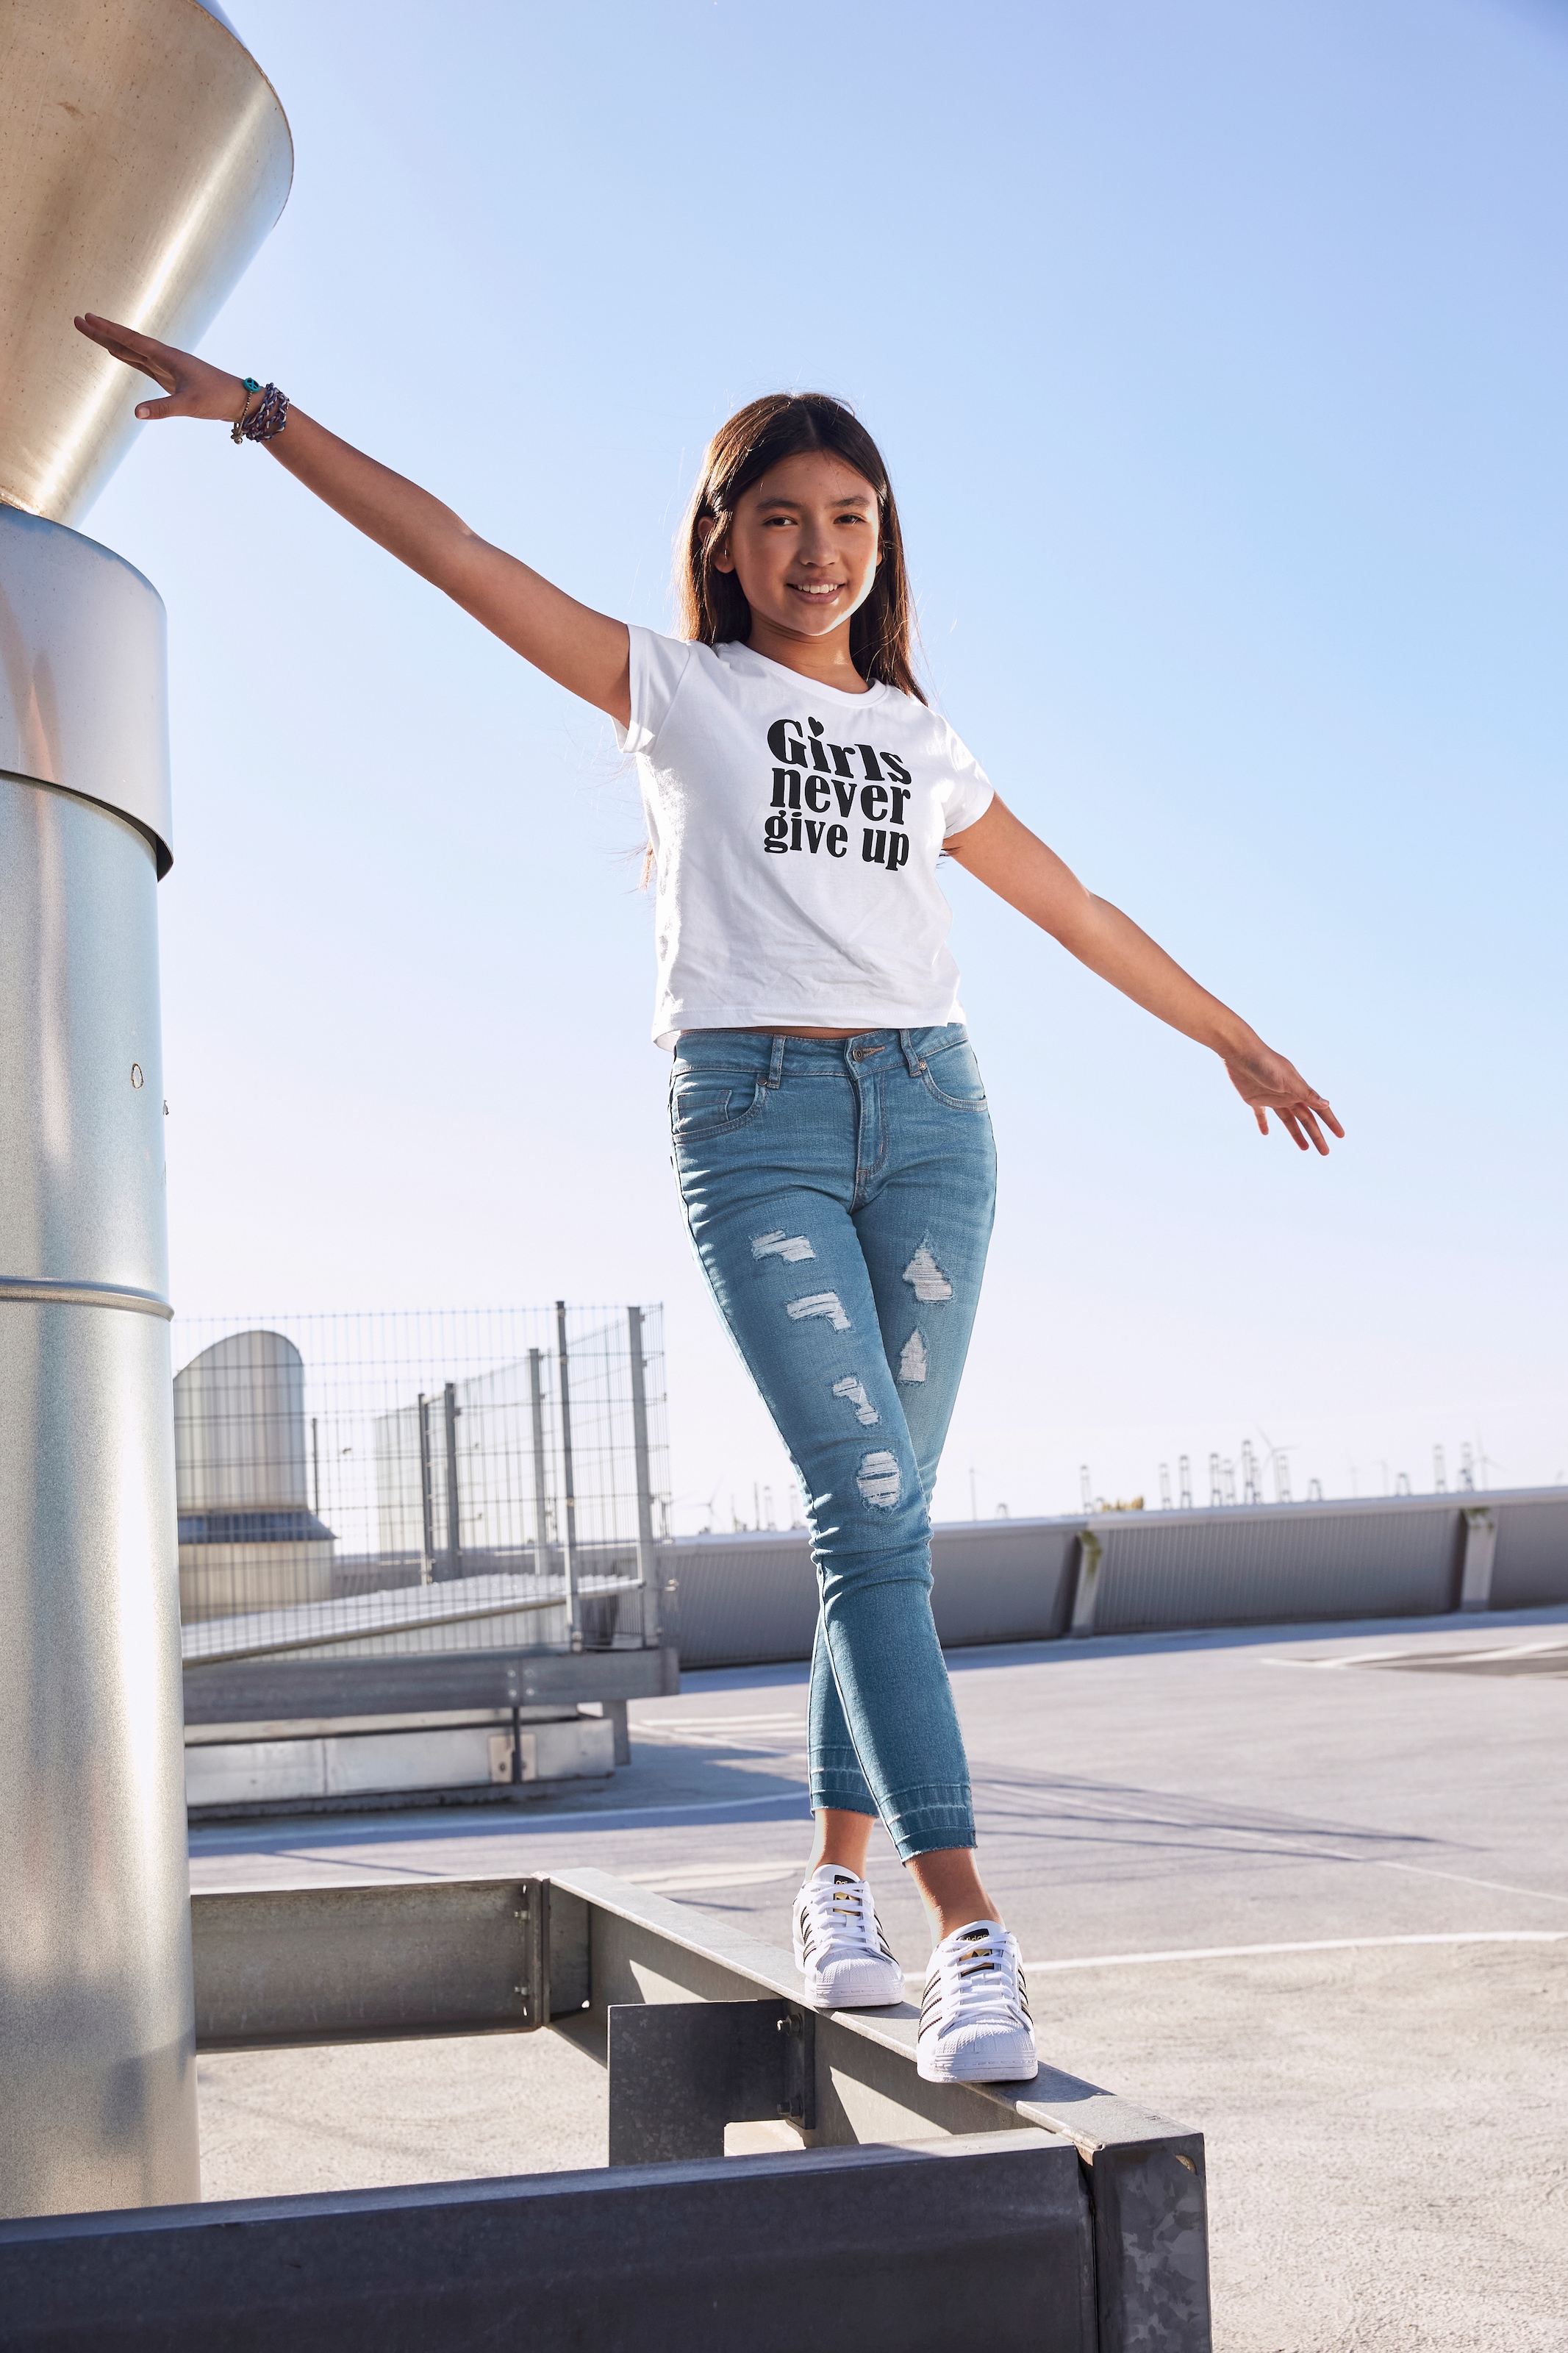 KIDSWORLD give jetzt »Girls %Sale T-Shirt nerver im kurze Form up«, modische